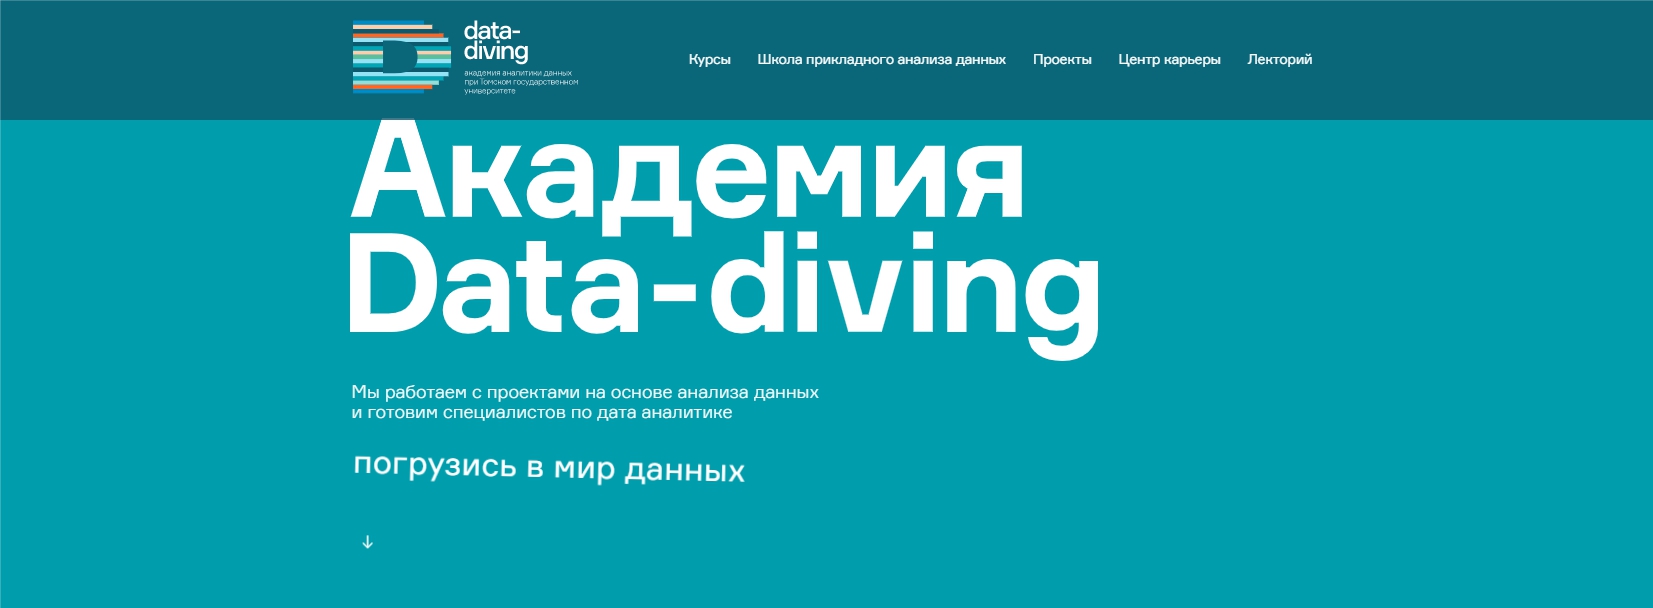 Академия Data-Diving.jpg